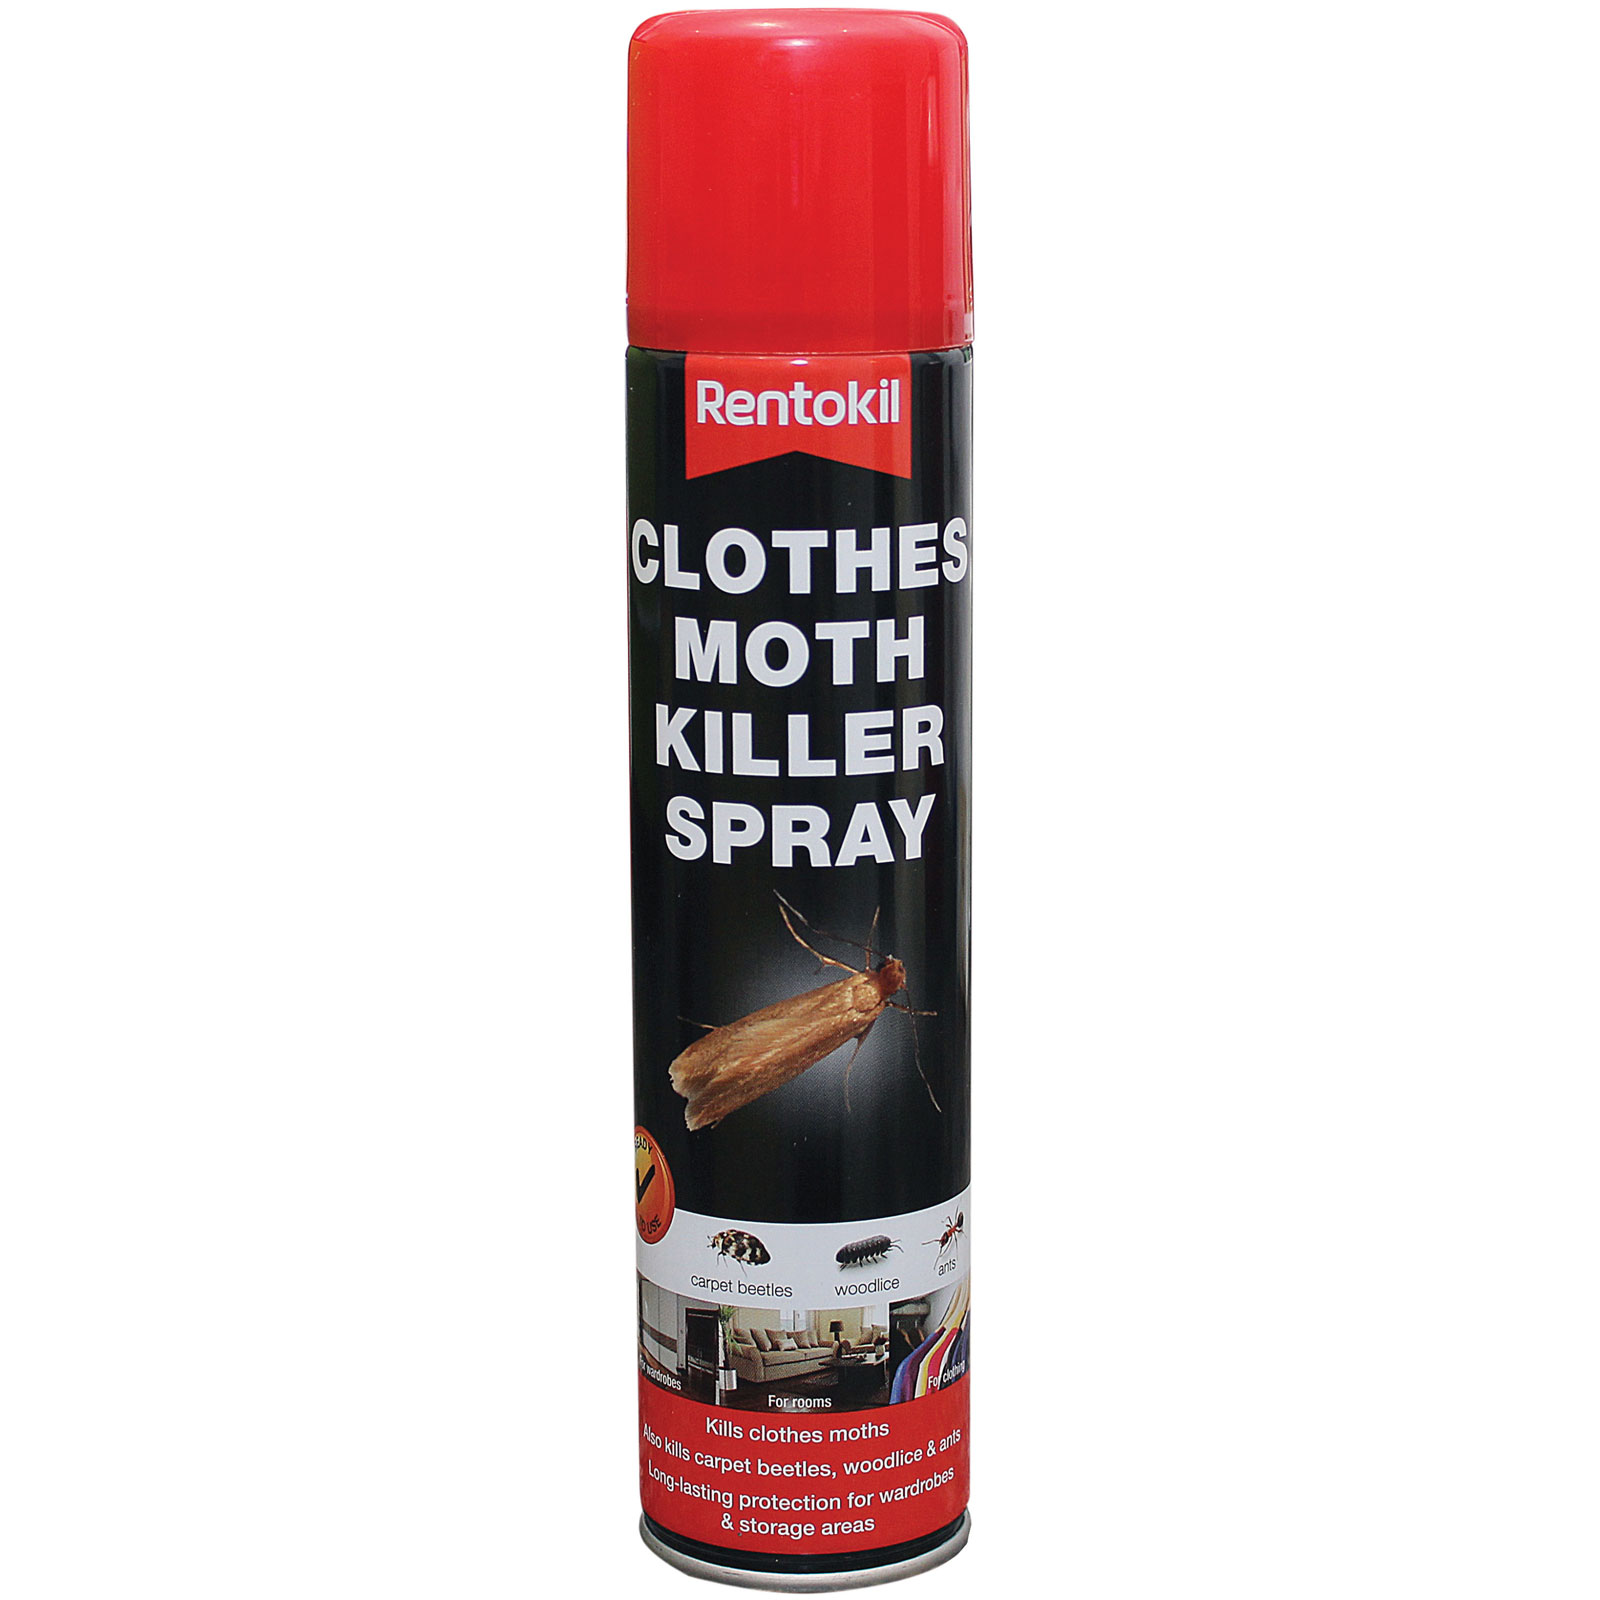 Rentokil Clothes Moth Control Product.